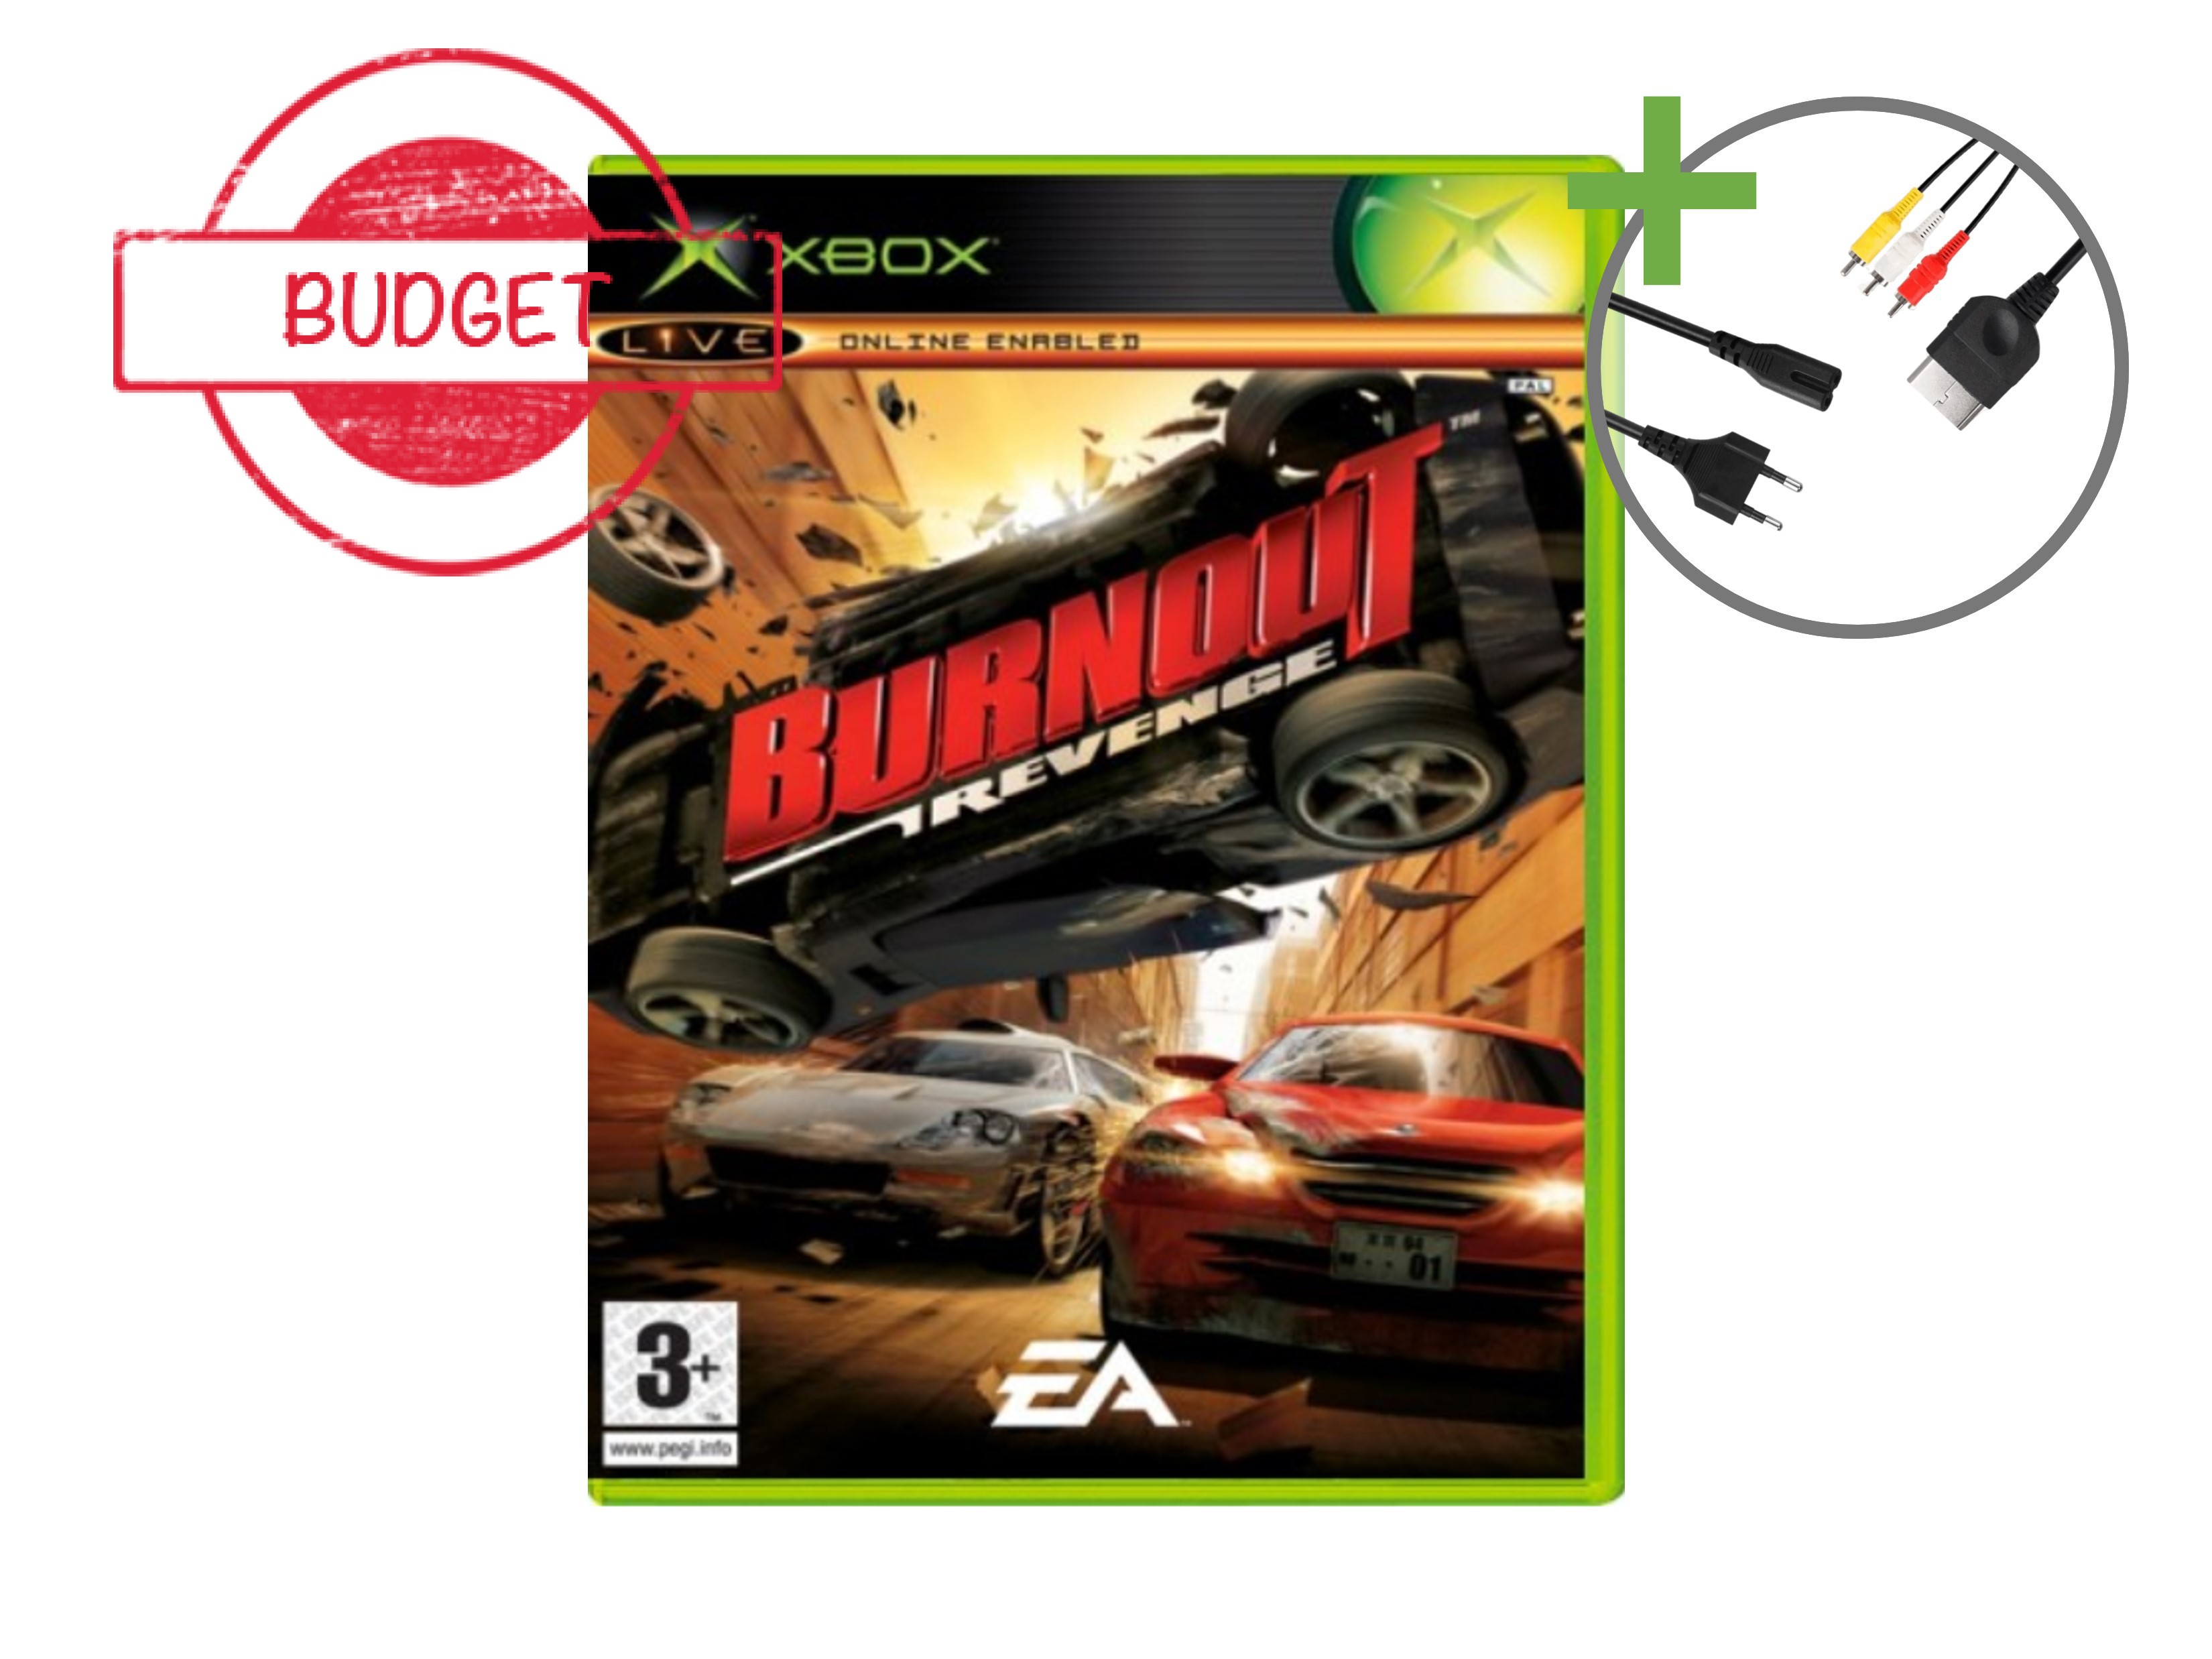 Microsoft Xbox Classic Starter Pack - Burnout 3 Edition - Budget - Xbox Original Hardware - 4